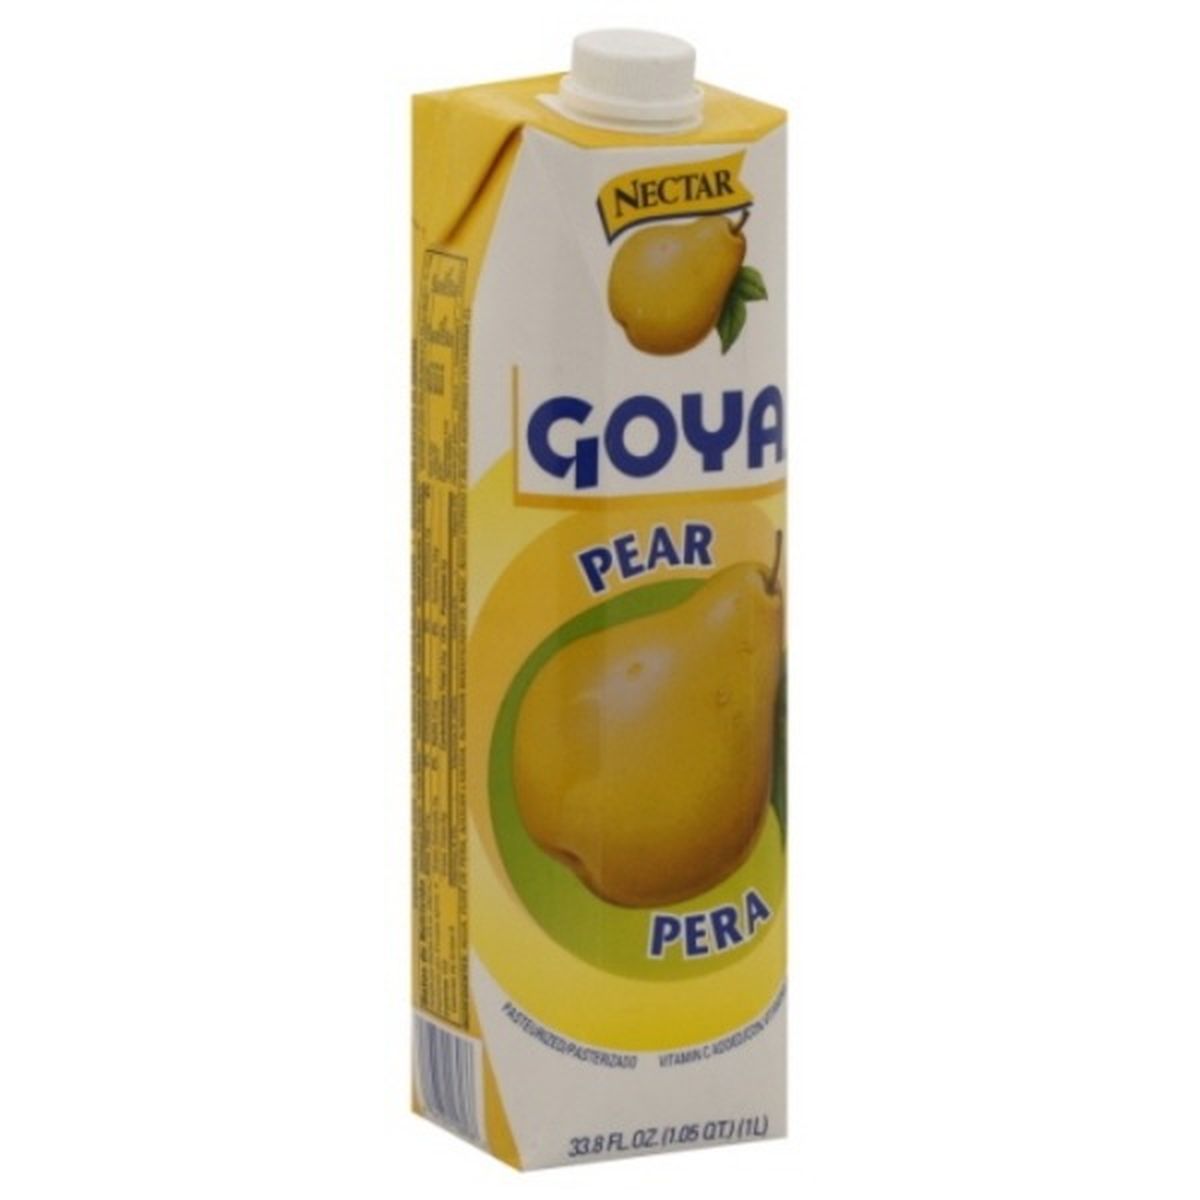 Calories in Goya Nectar, Pear